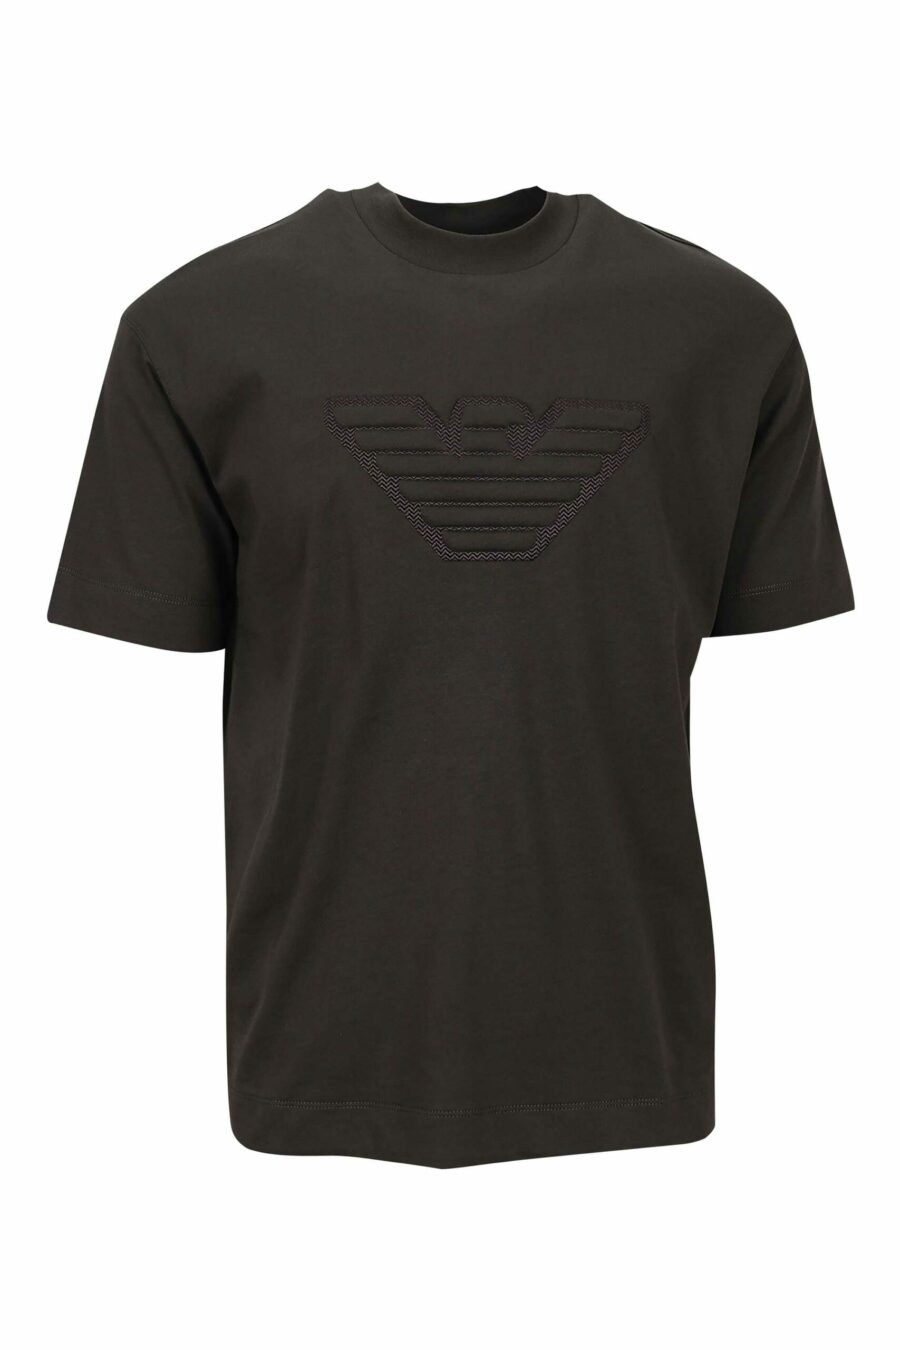 Militärgrünes T-Shirt mit monochromem Adler-Maxilogo - 8057970433323 skaliert